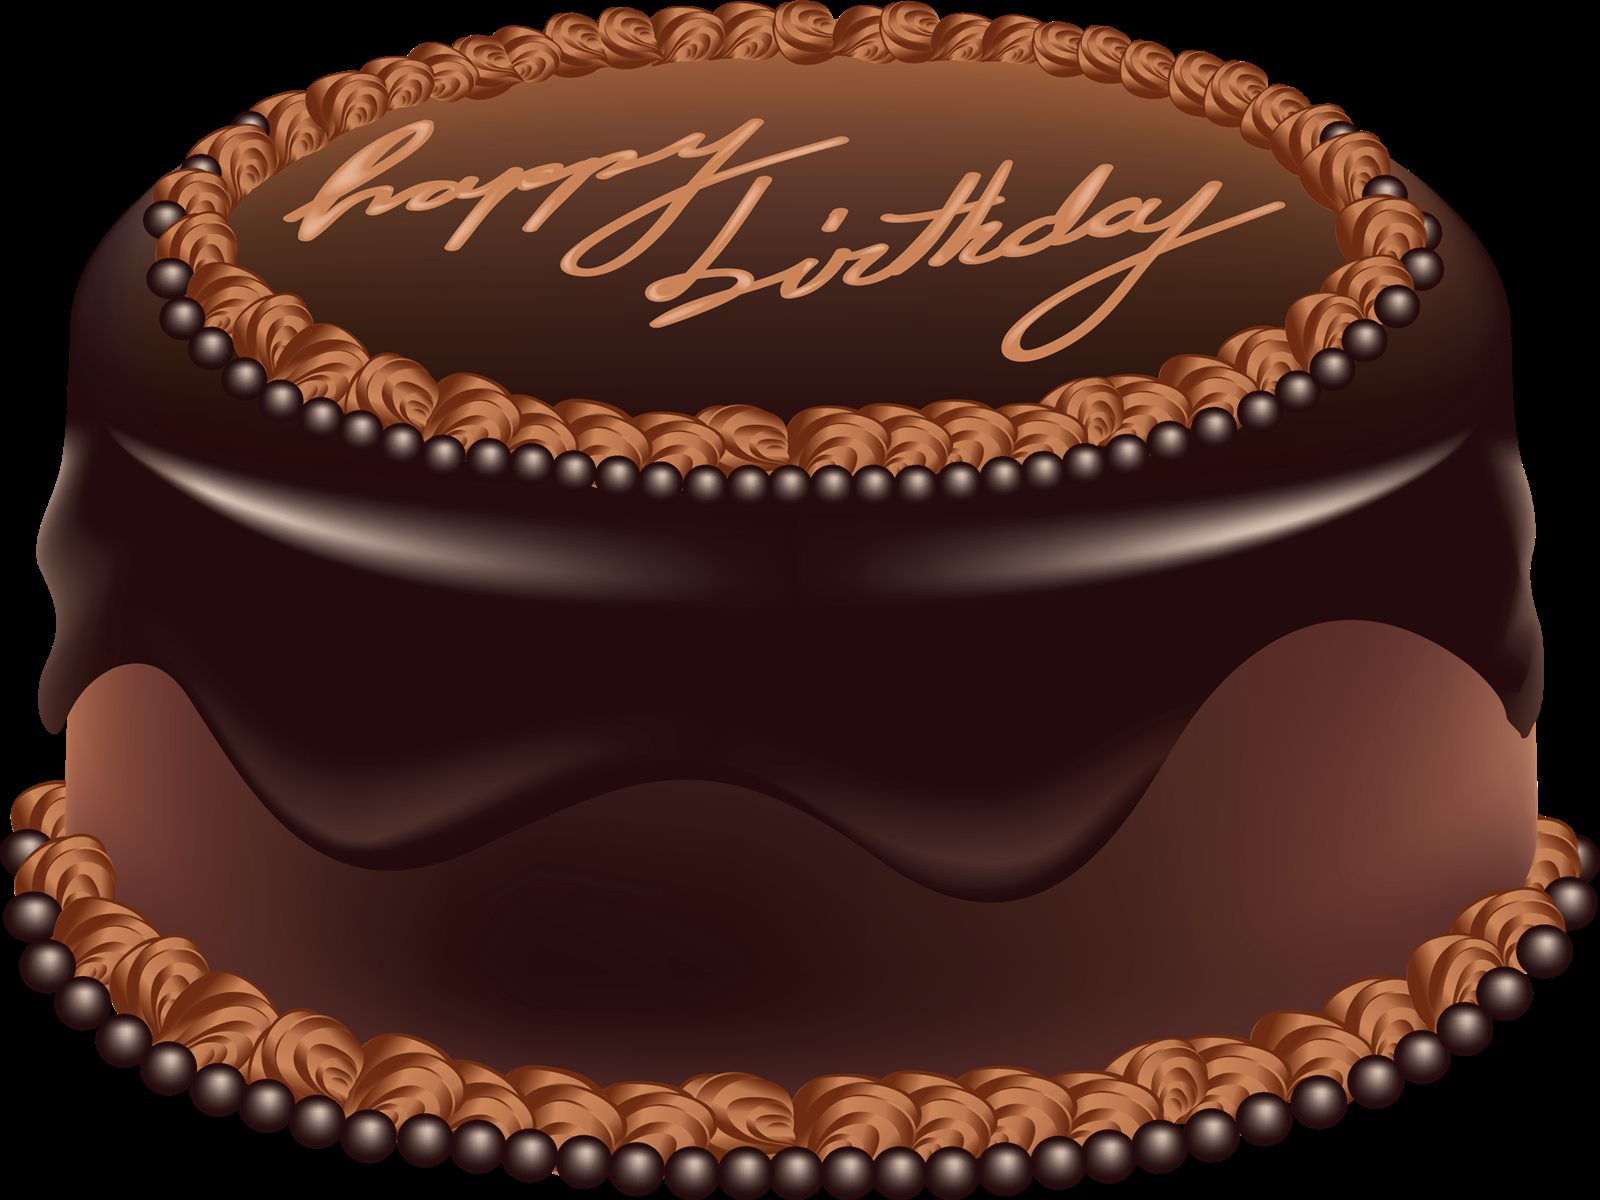 Happy Birthday Cake Hd Wallpaper - Chocolate Birthday Cake Design - HD Wallpaper 